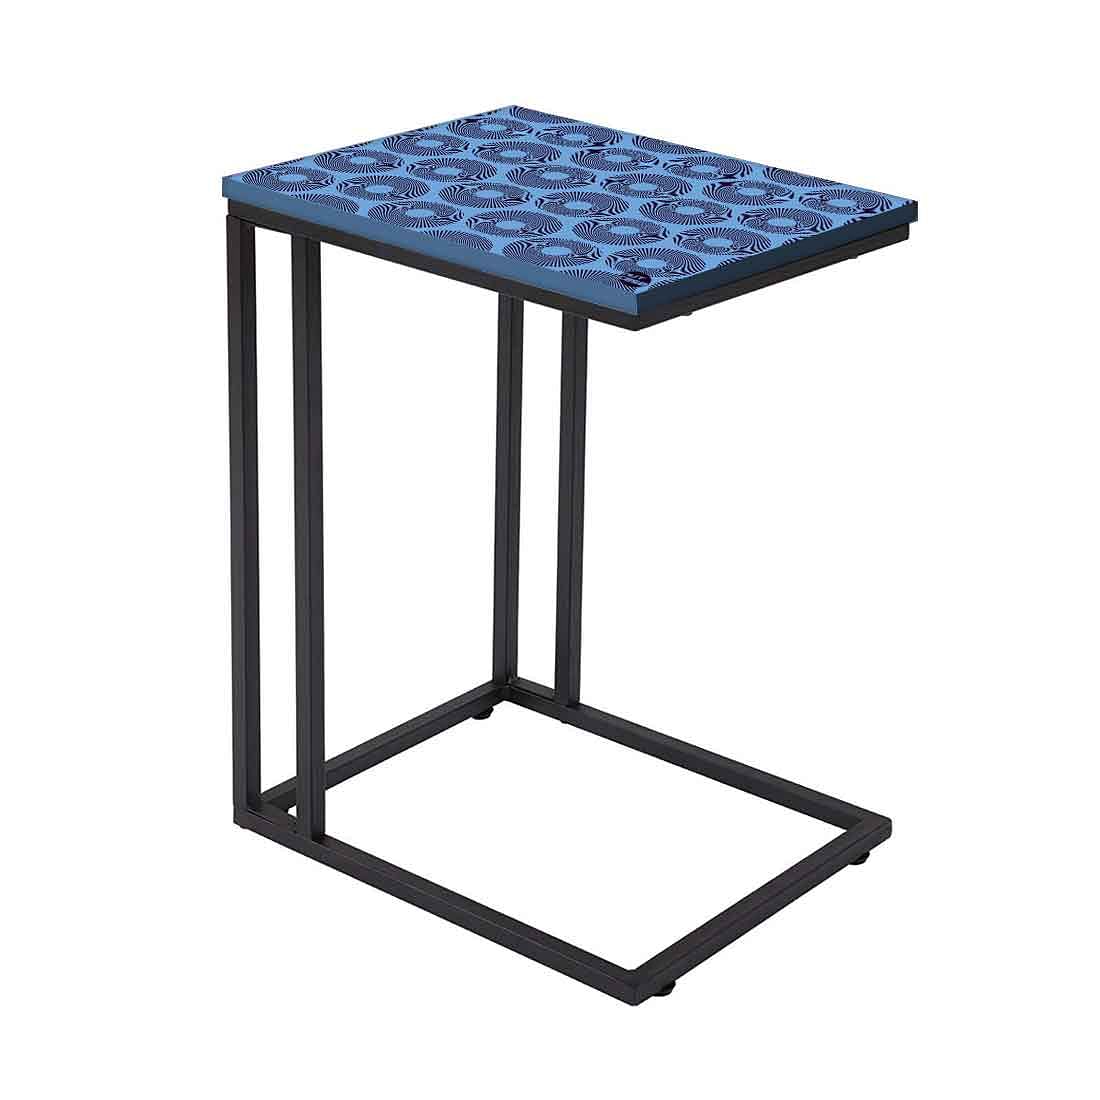 C Shaped Bedside Table For Sofa - Blue Retro Pattern Nutcase